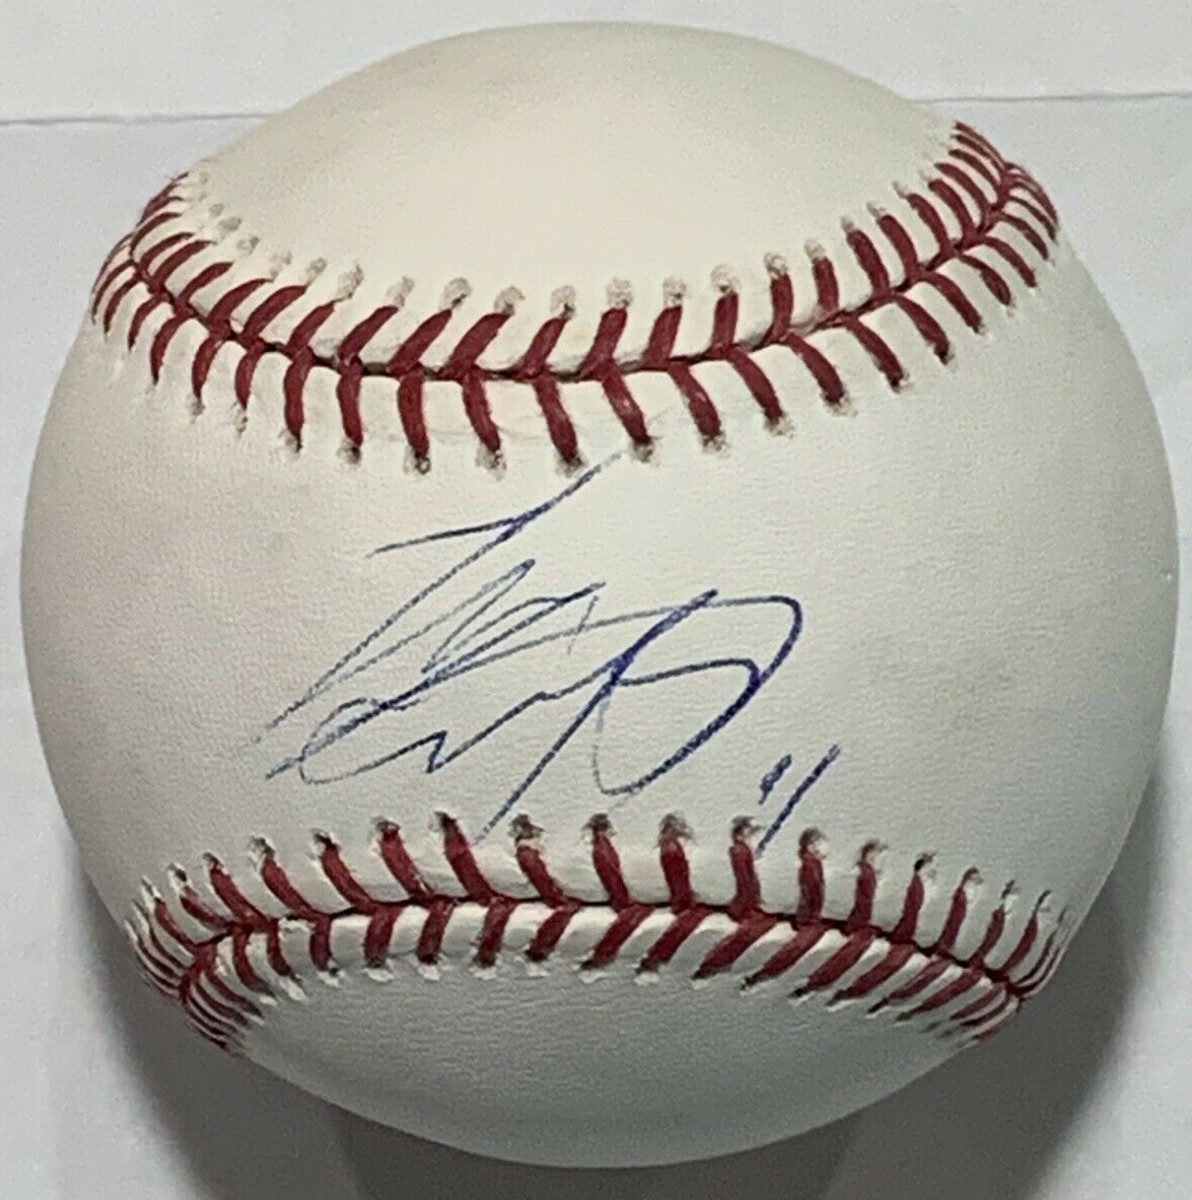 Shohei Ohtani autograph Kanji signature signed Baseball MLB Auth +